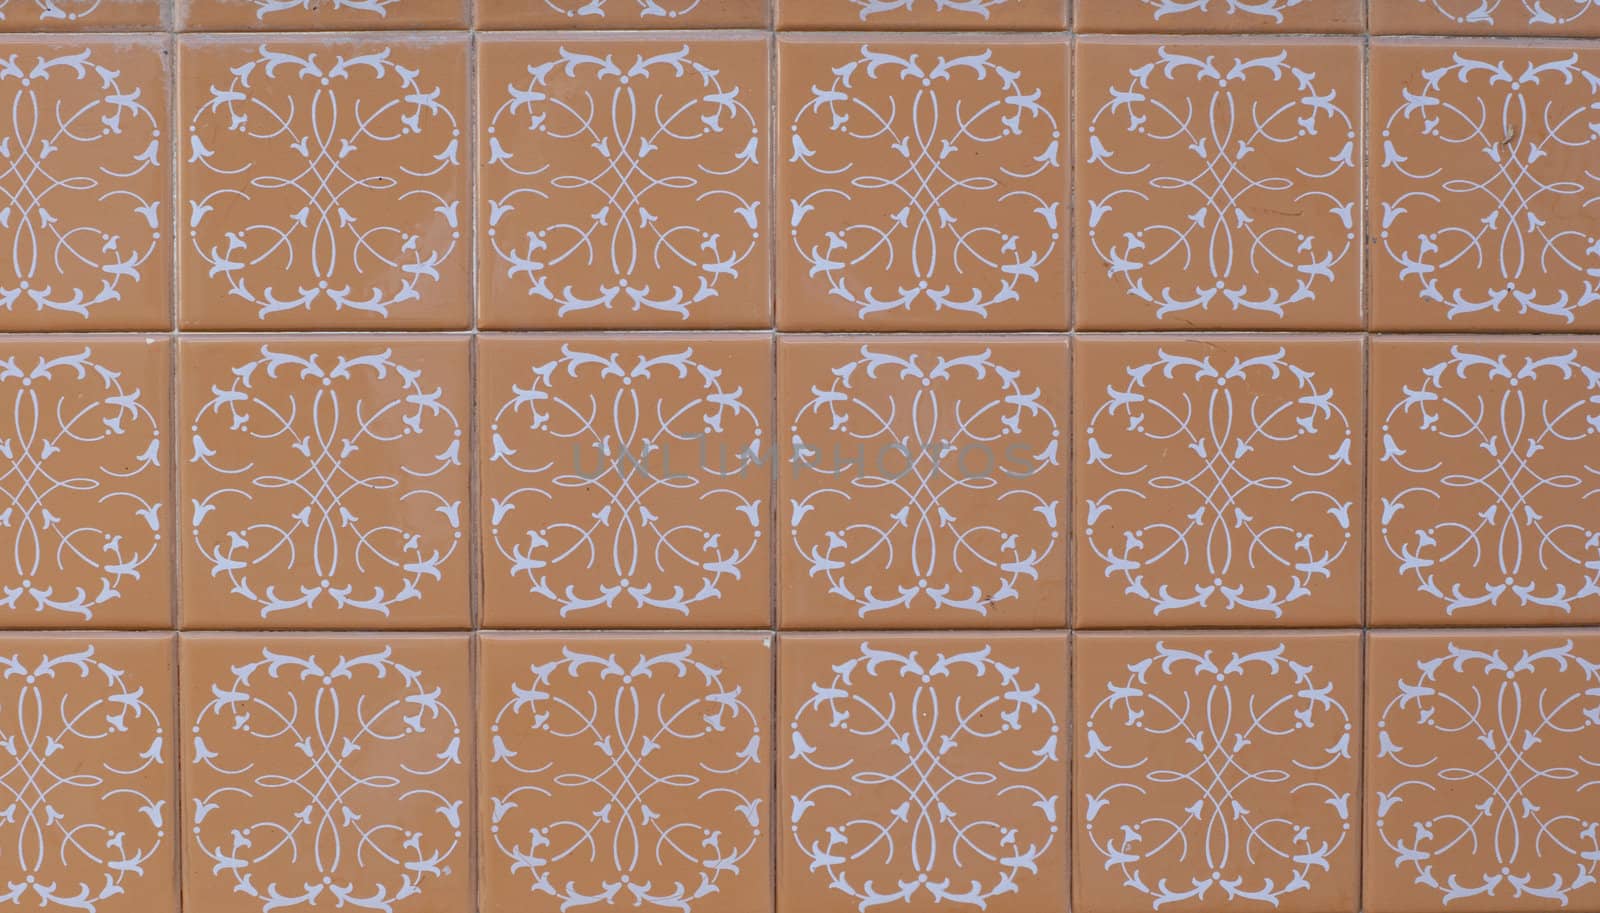 Portuguese glazed tiles 186 by homydesign